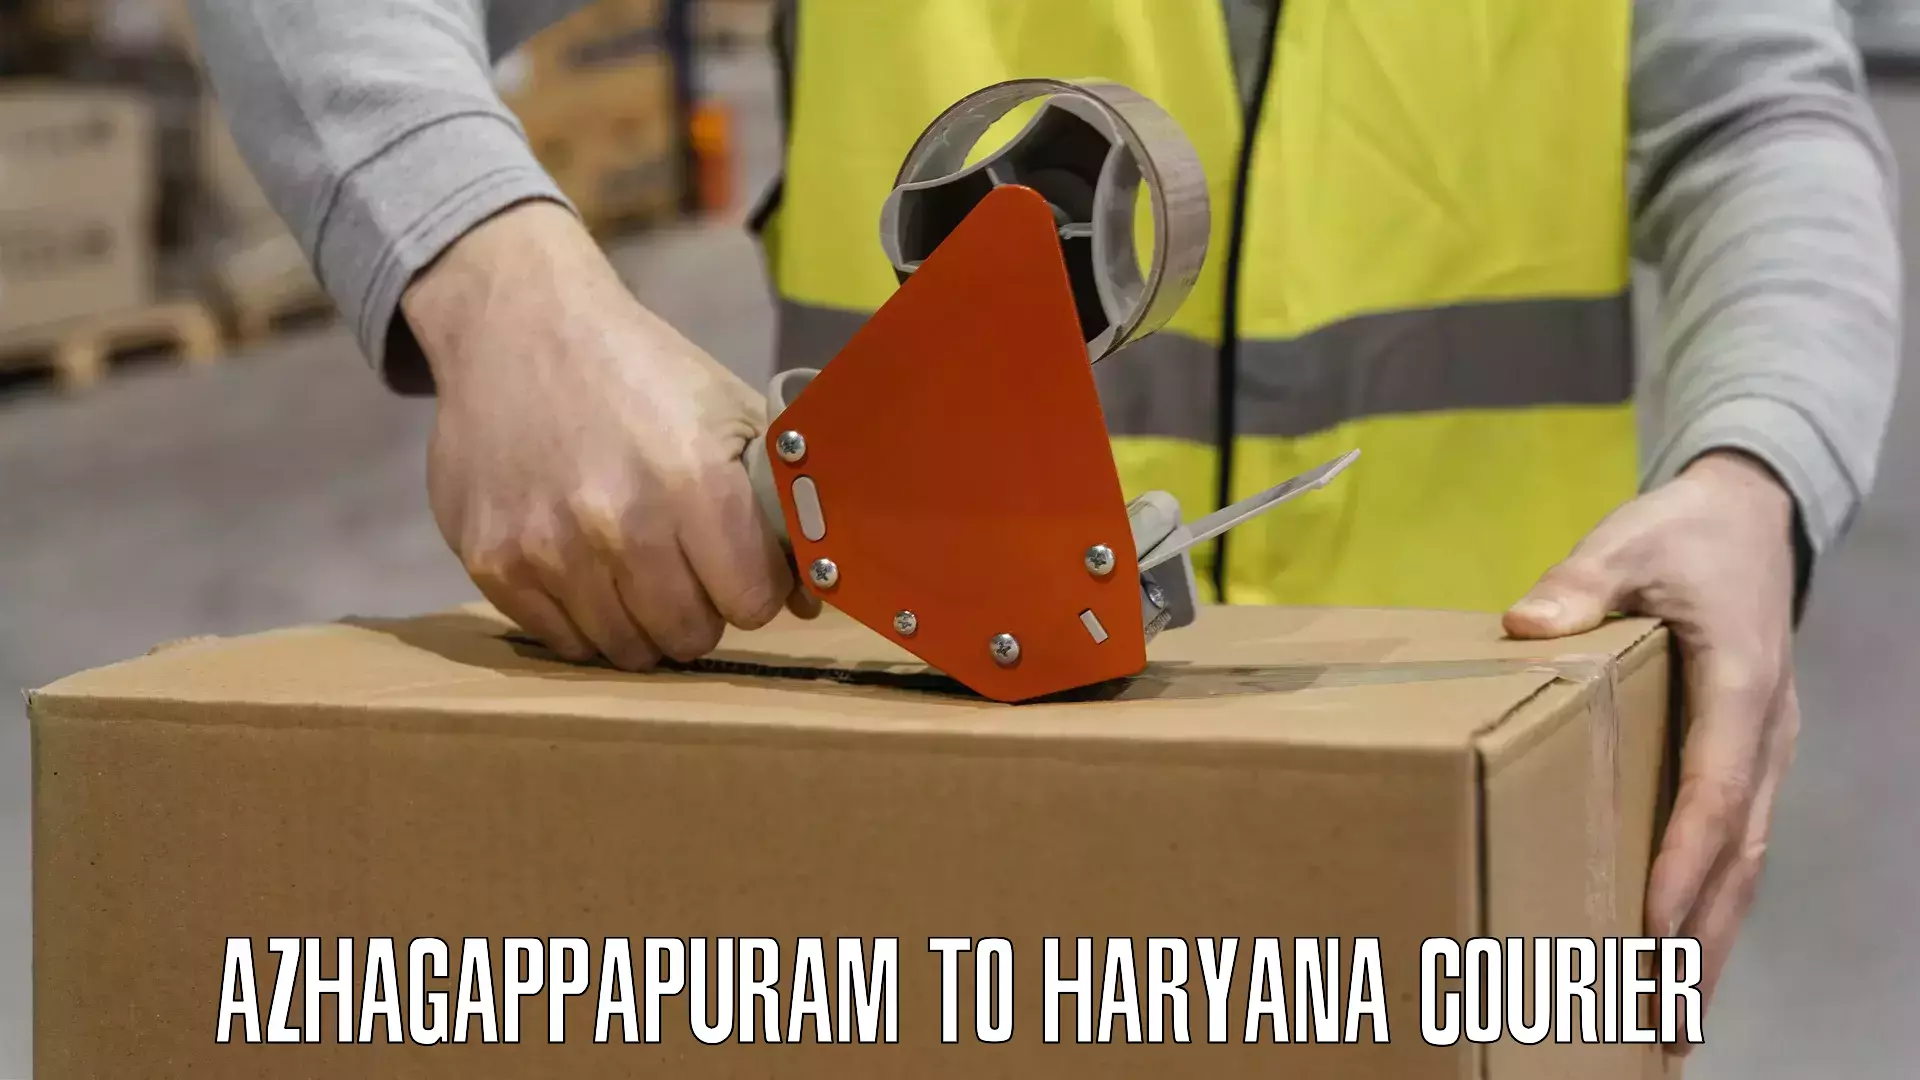 Courier service innovation Azhagappapuram to Narwana